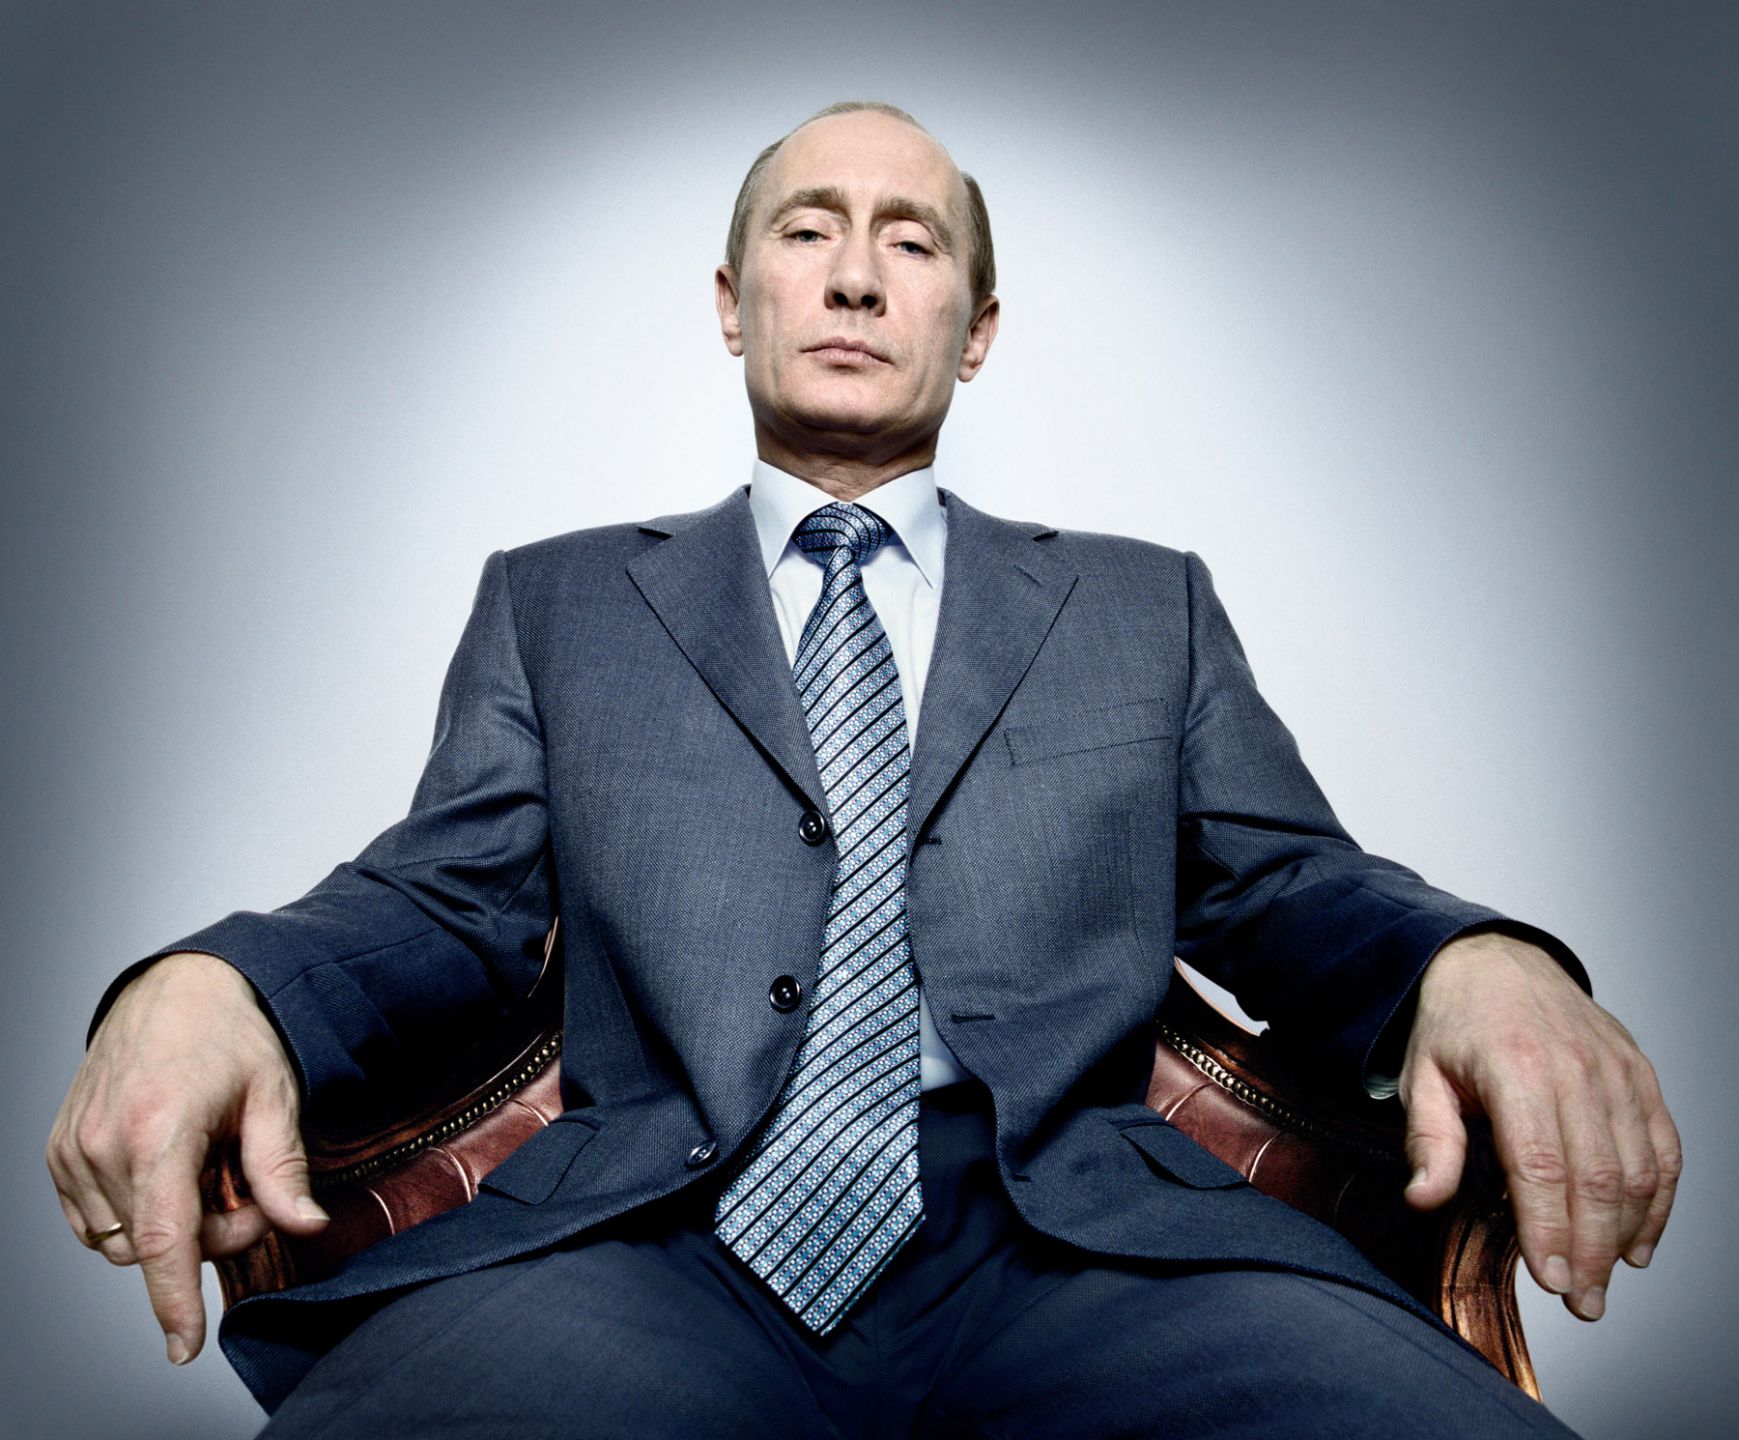 Putin portrait photography